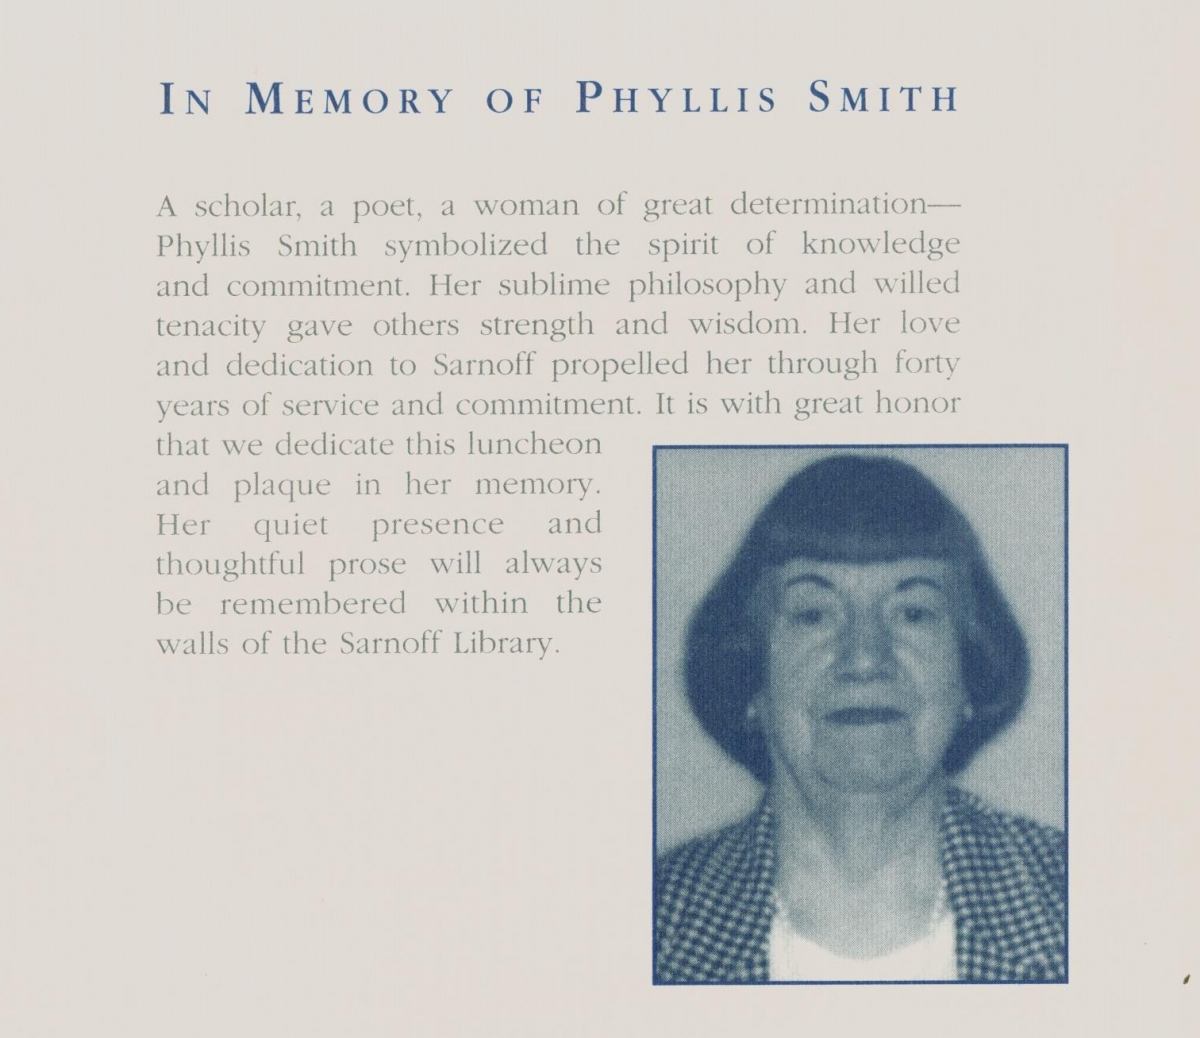 Phyllis Smith's memorial card